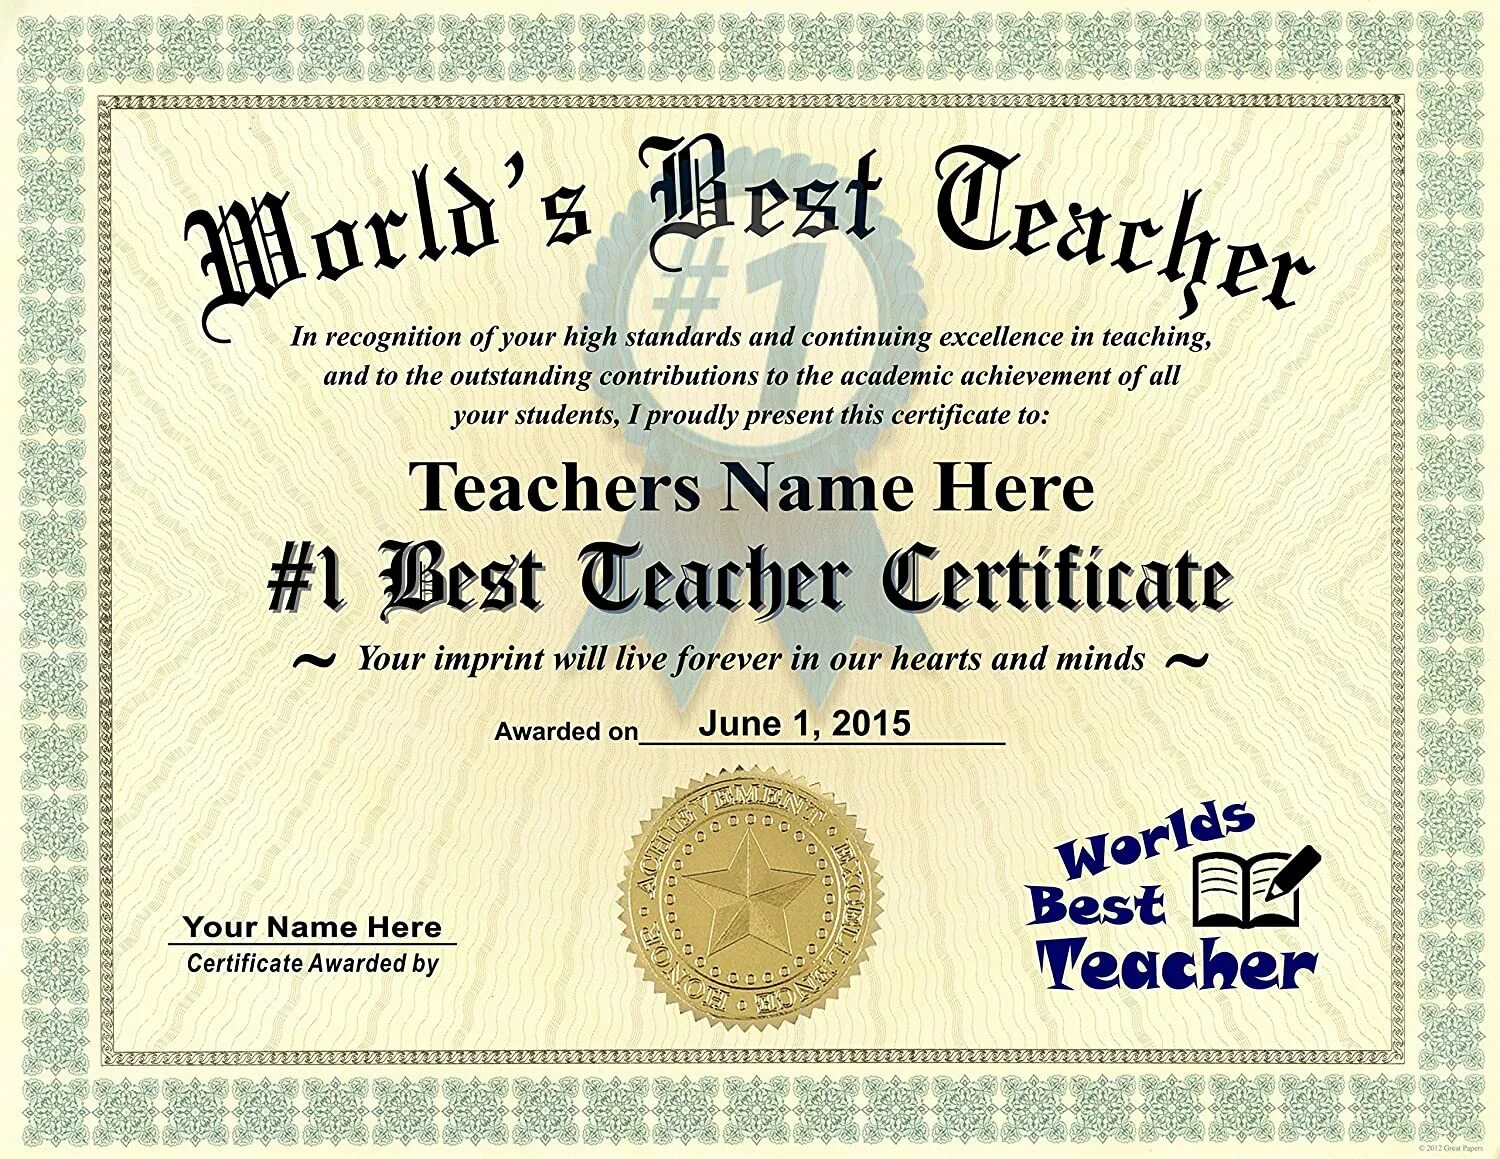 Best teacher Certificate. Certificate учительница. Certificate Awarded best teacher. Award Certificate for teachers.